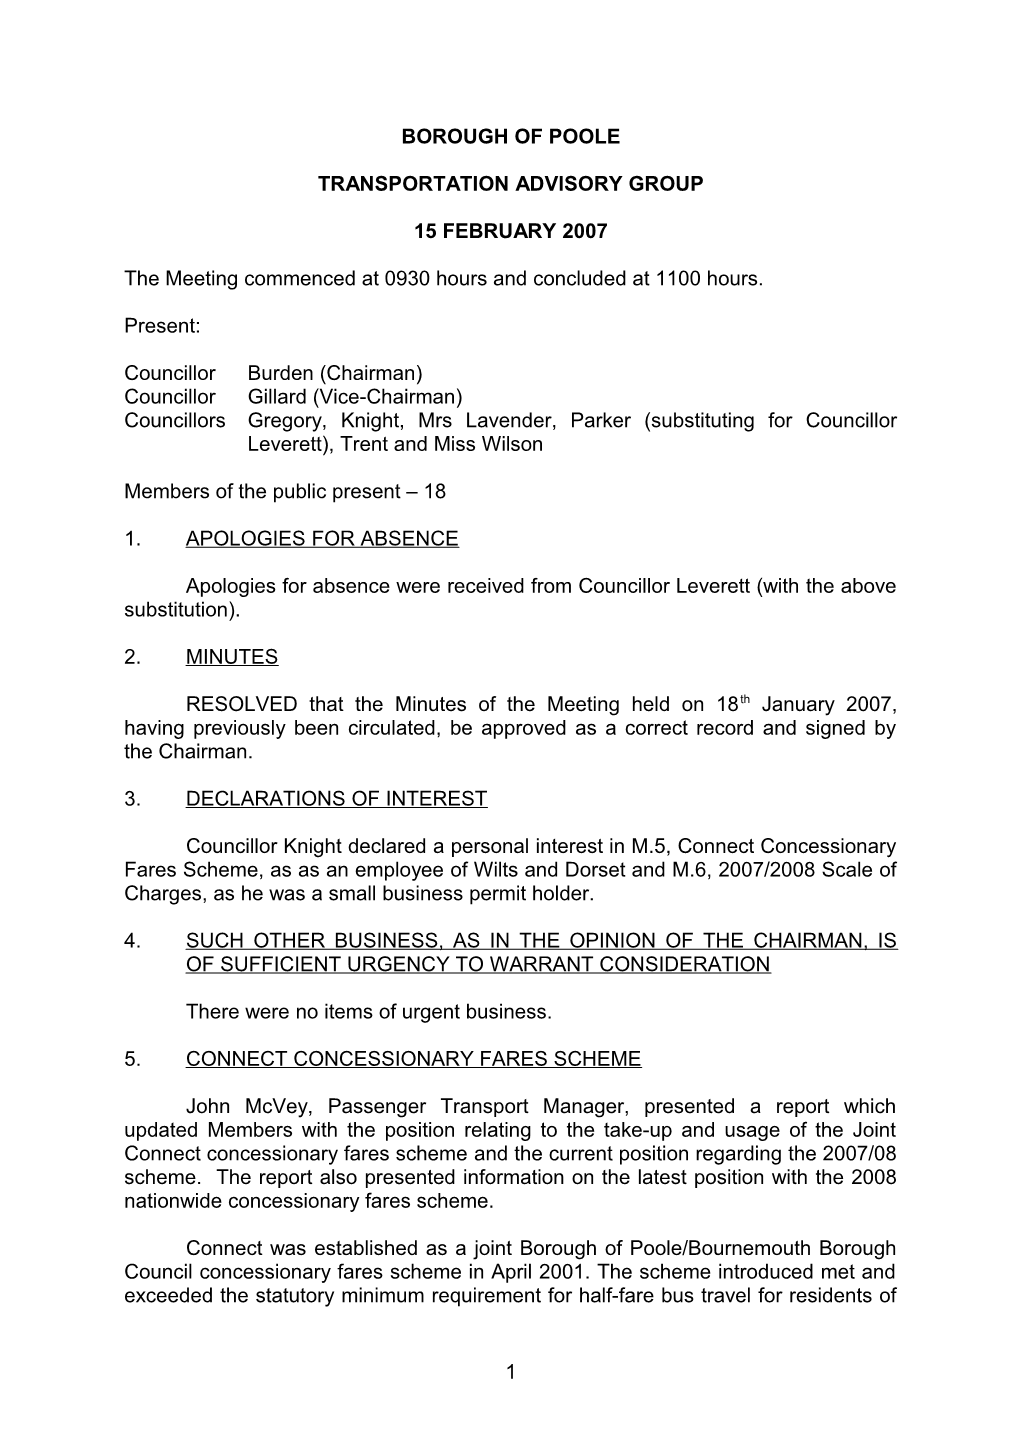 Minutes - Transportation Advisory Group - 15 February 2007